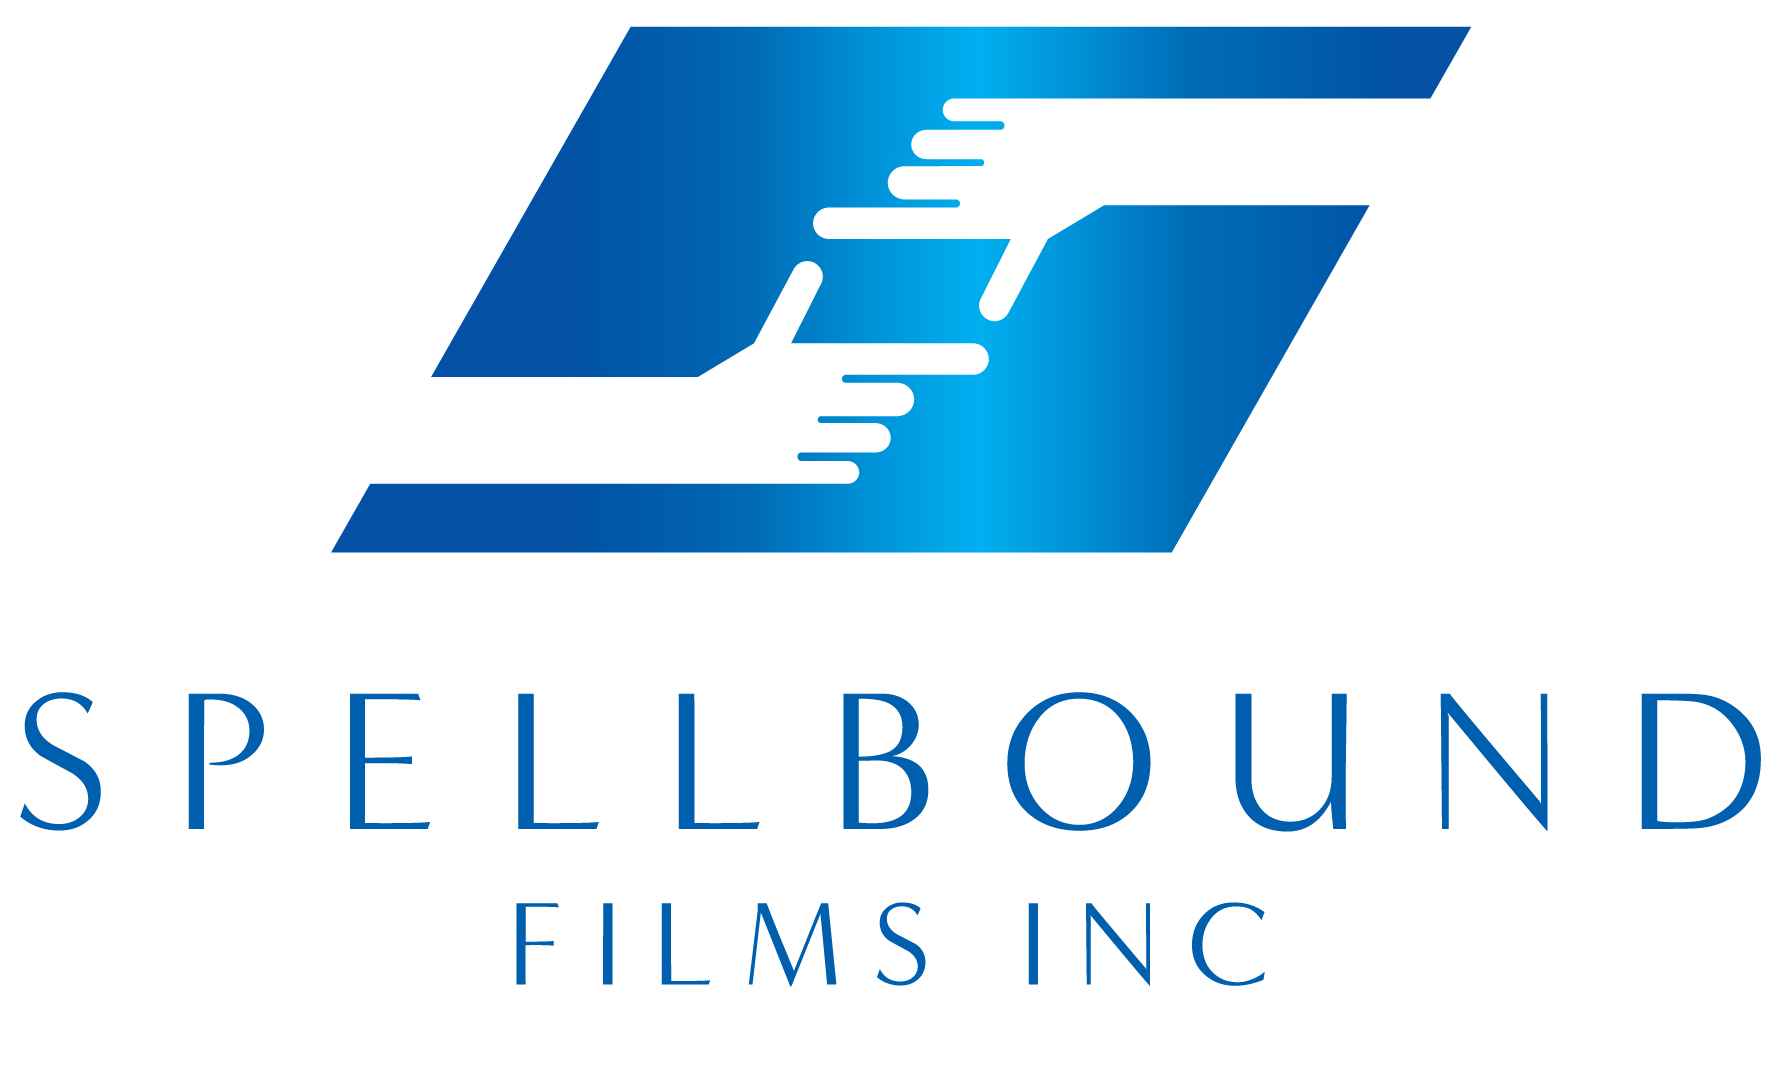 Spellbound Films Inc